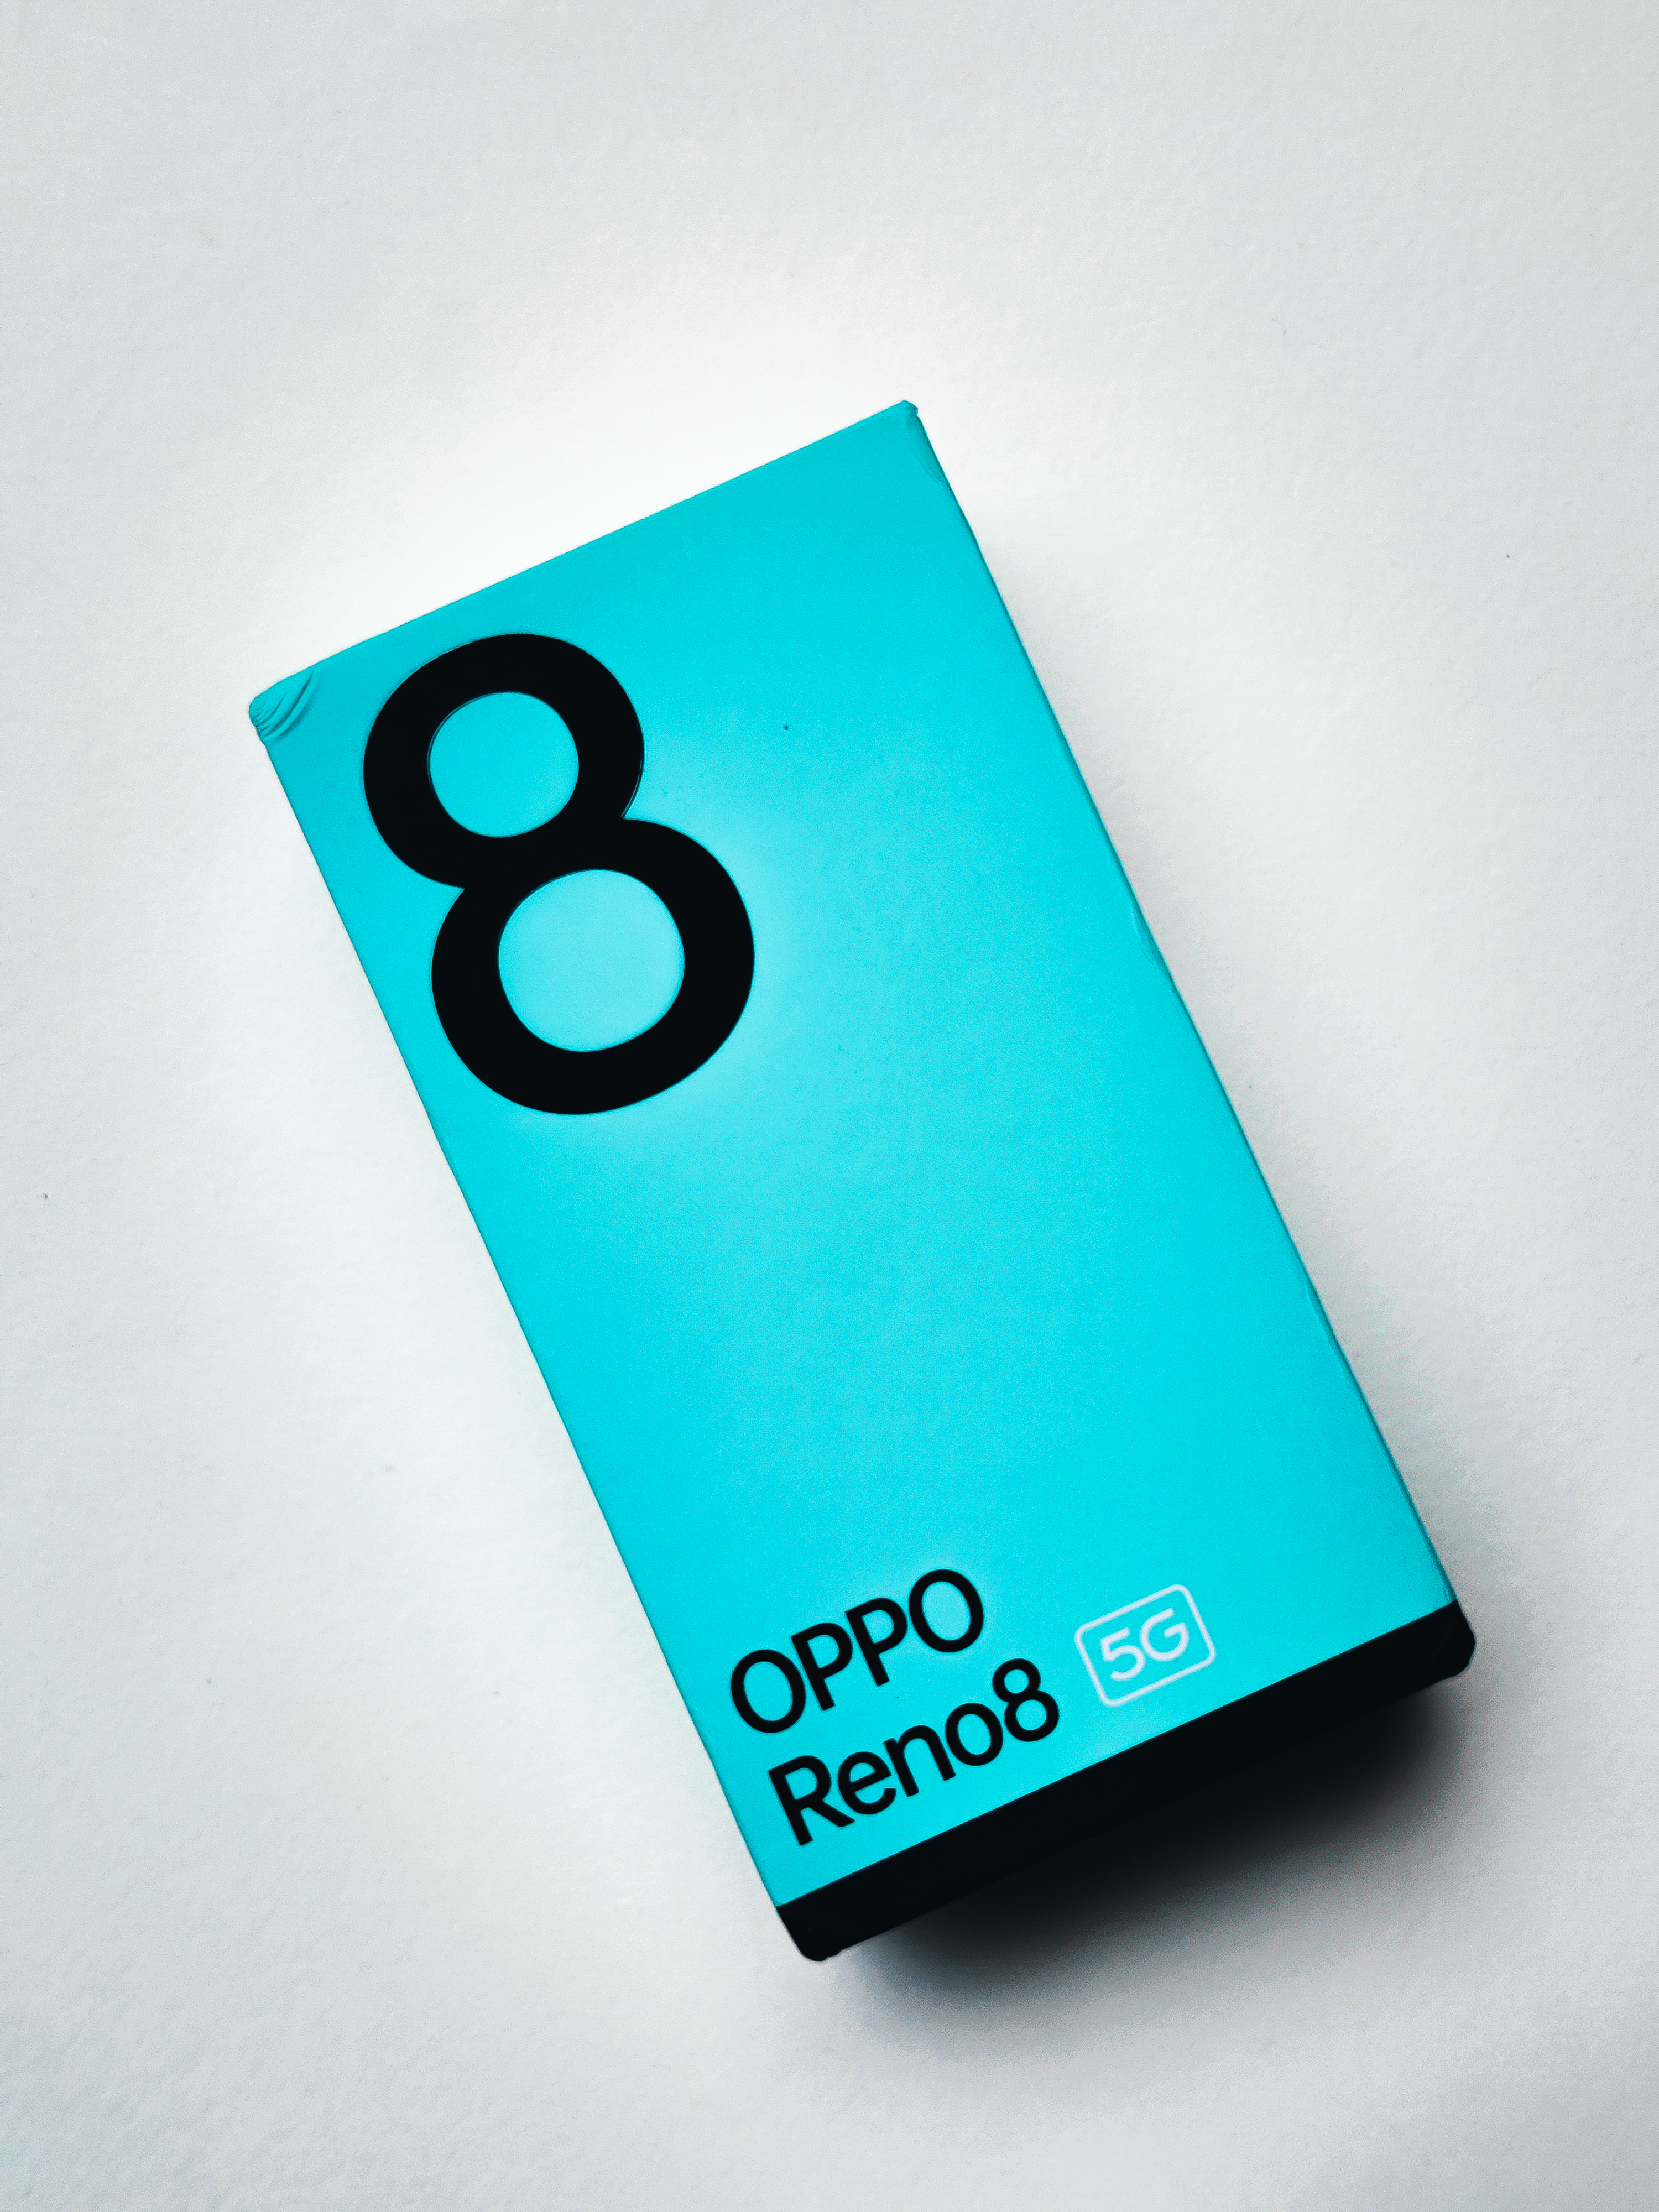 OPPO RENO 8 5G UNBOXING AND FIRST IMPRESSION #OPPOAMBASSADOR  #OPPORENO8SERIES #RENO85g